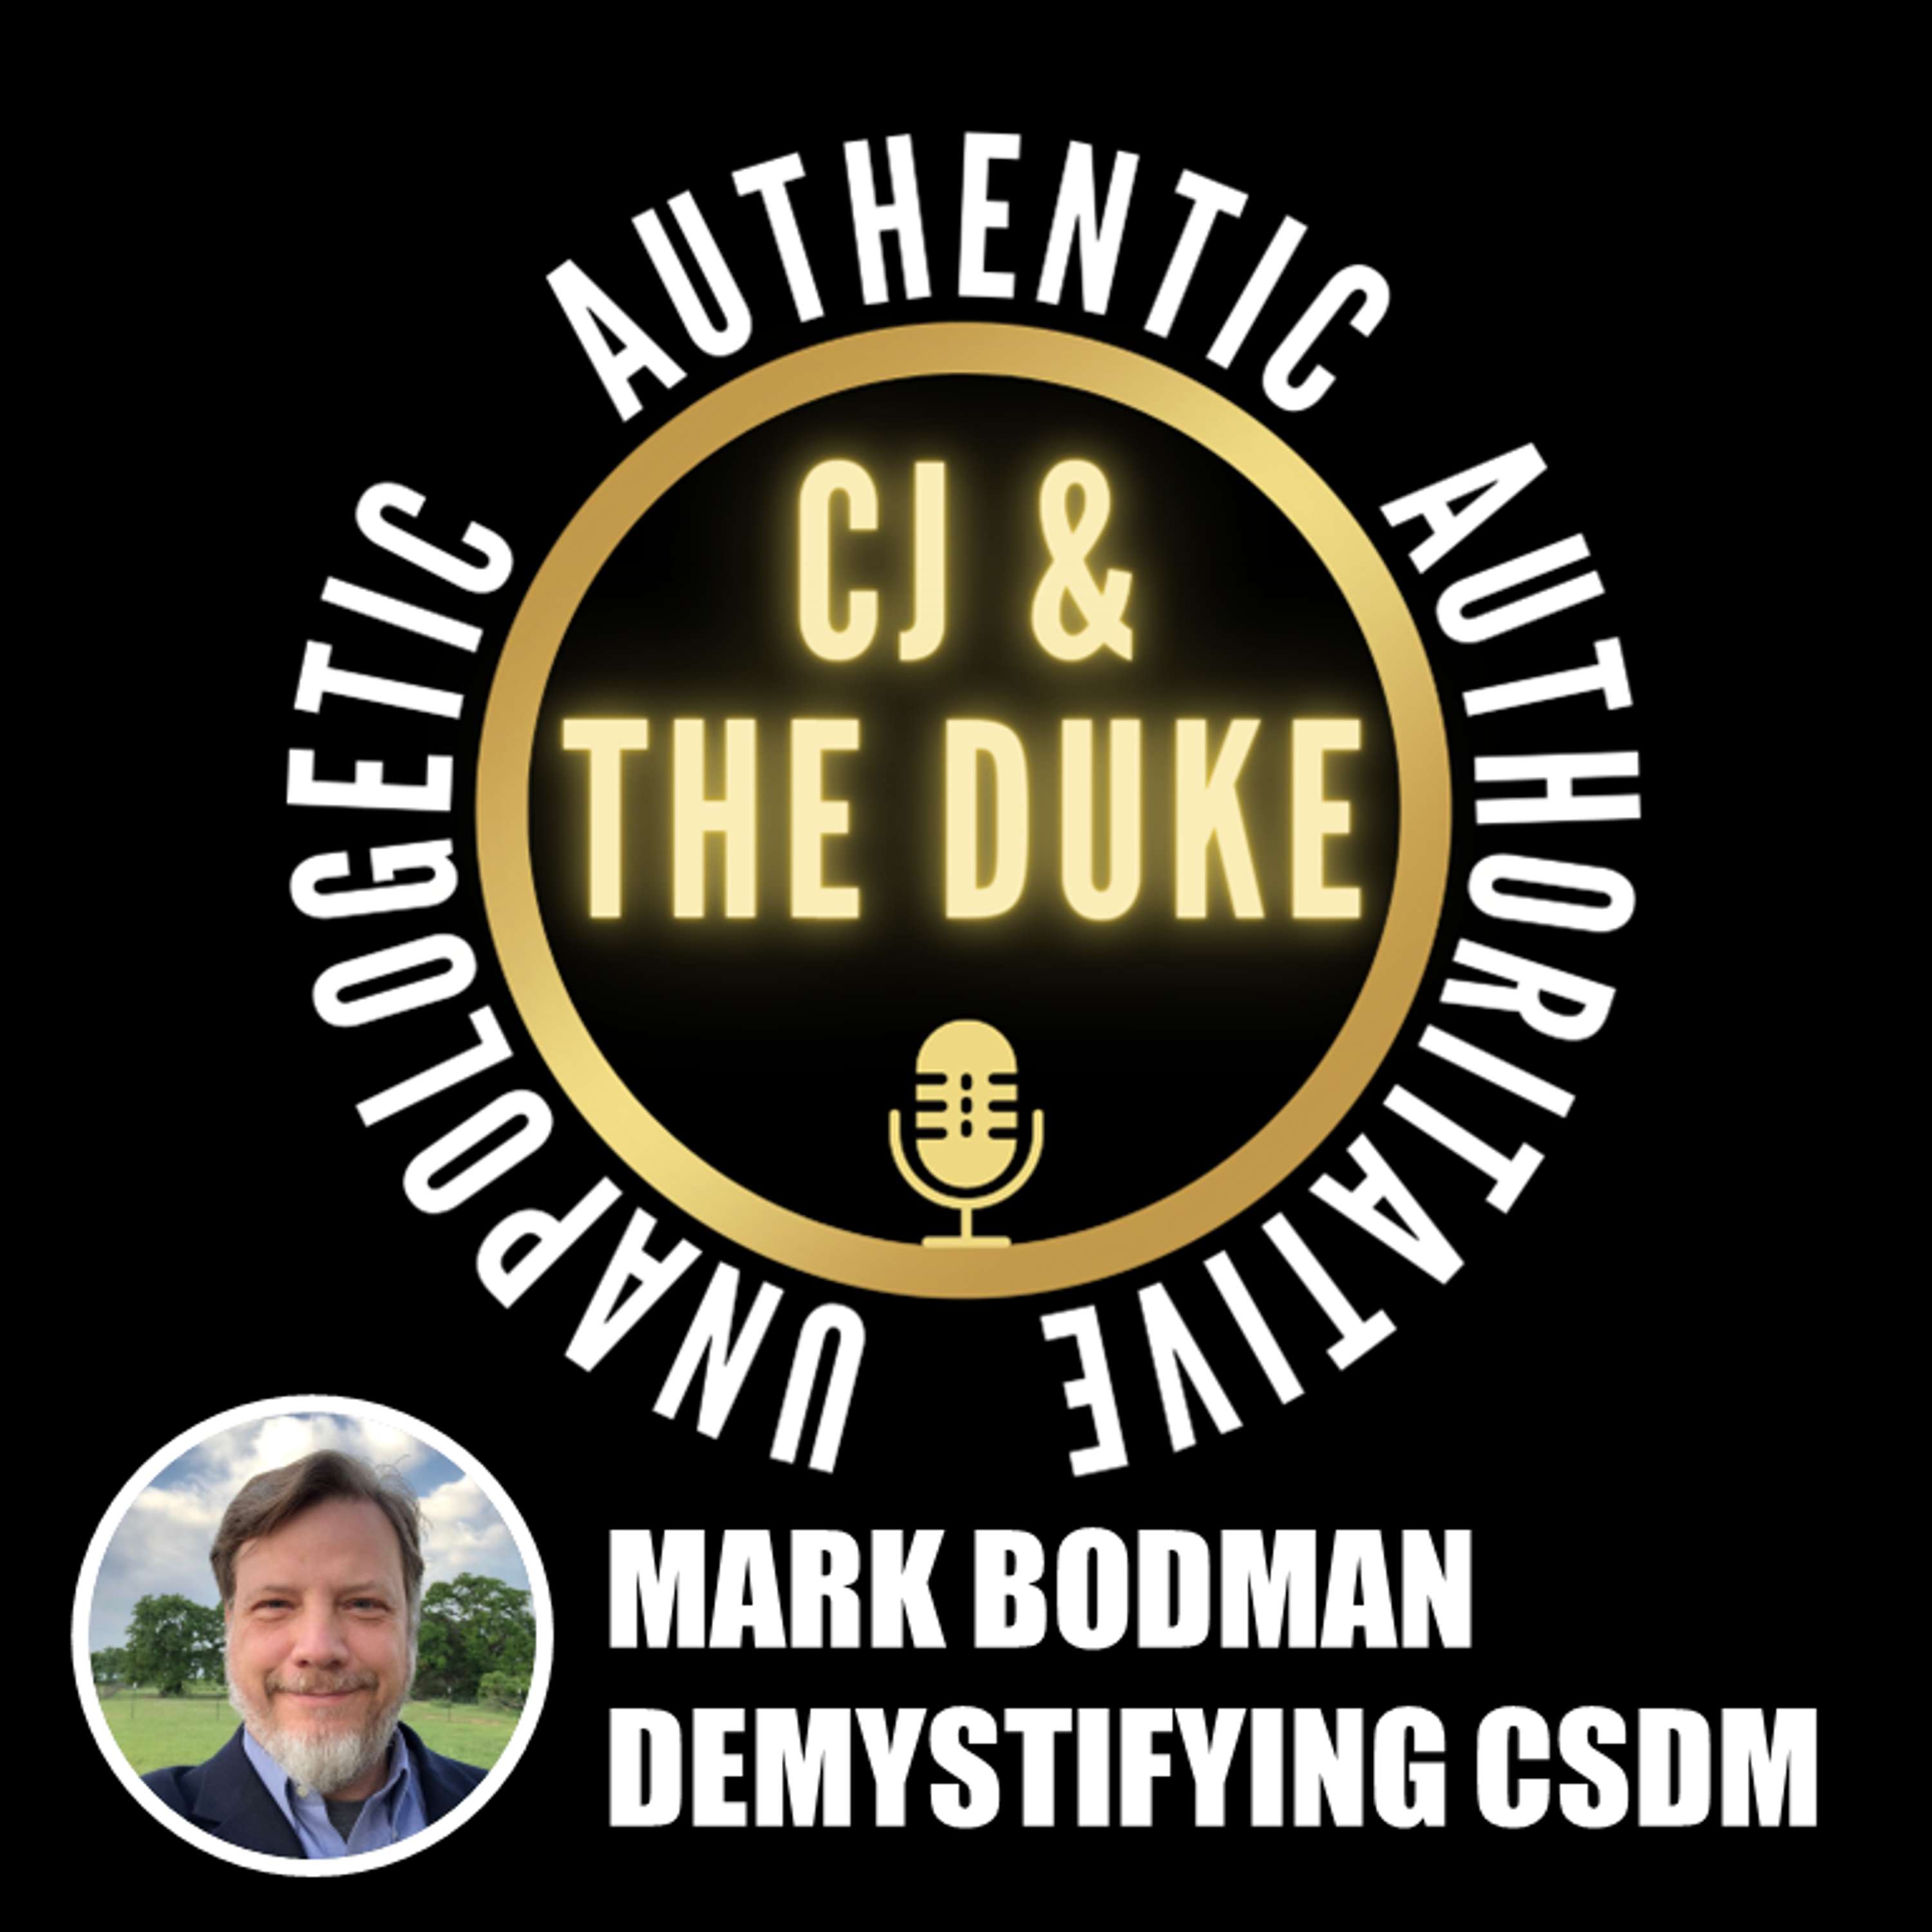 Straight talk on CSDM with Mark Bodman